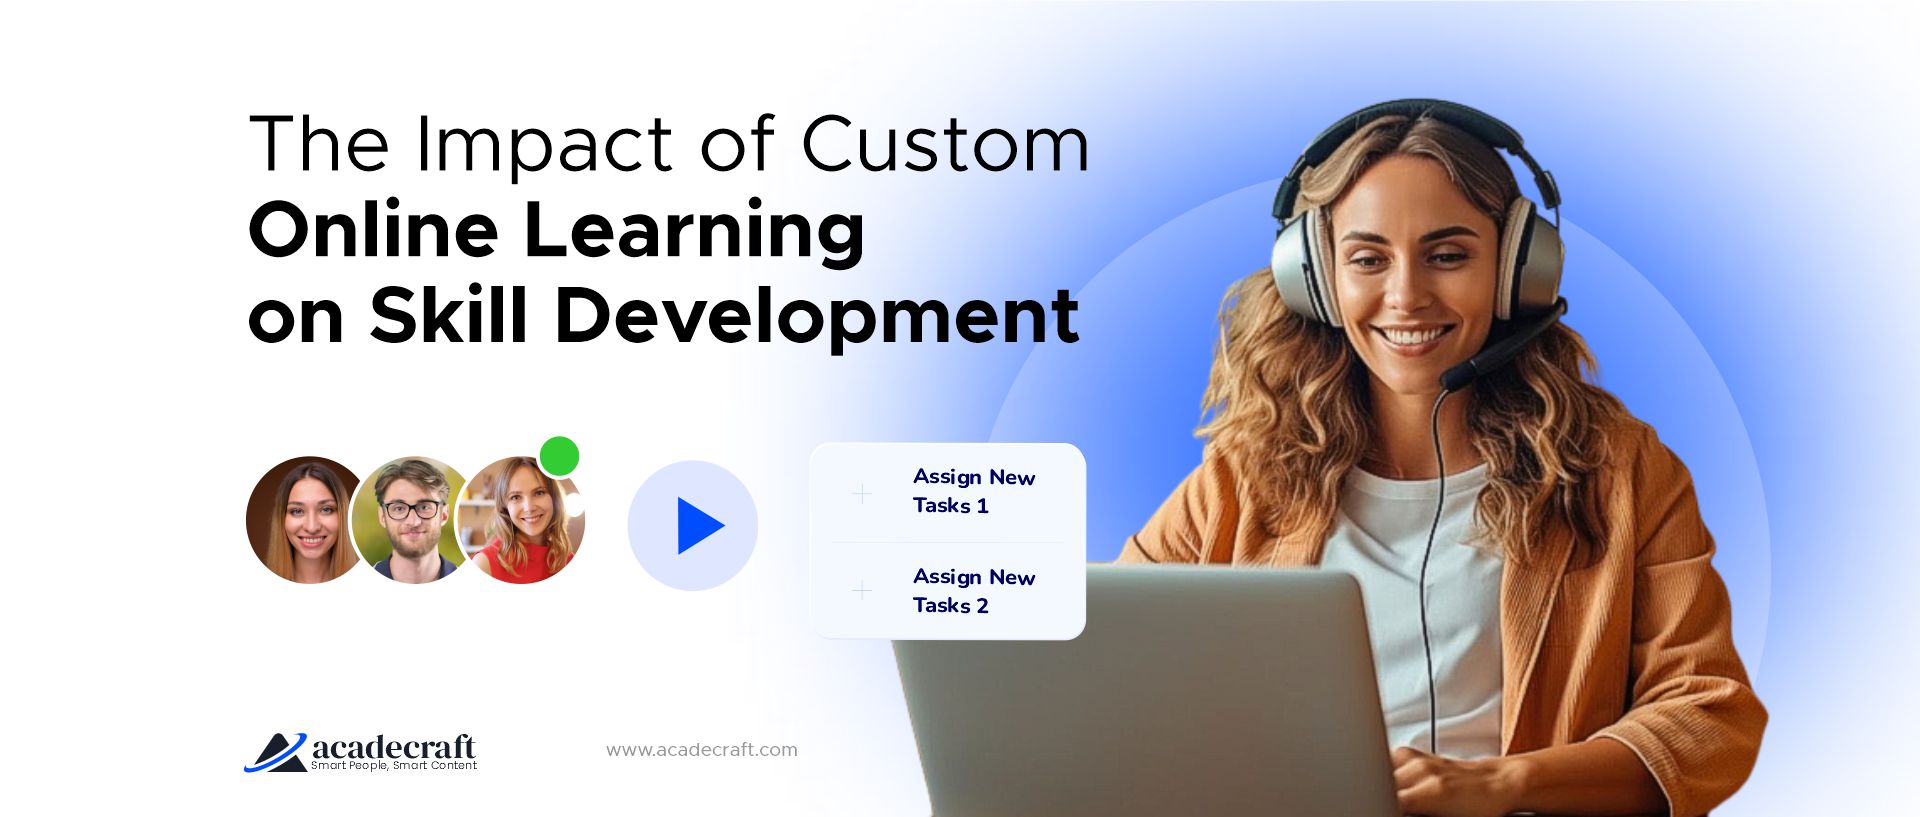 How Custom Online Learning Impacts Skill Development